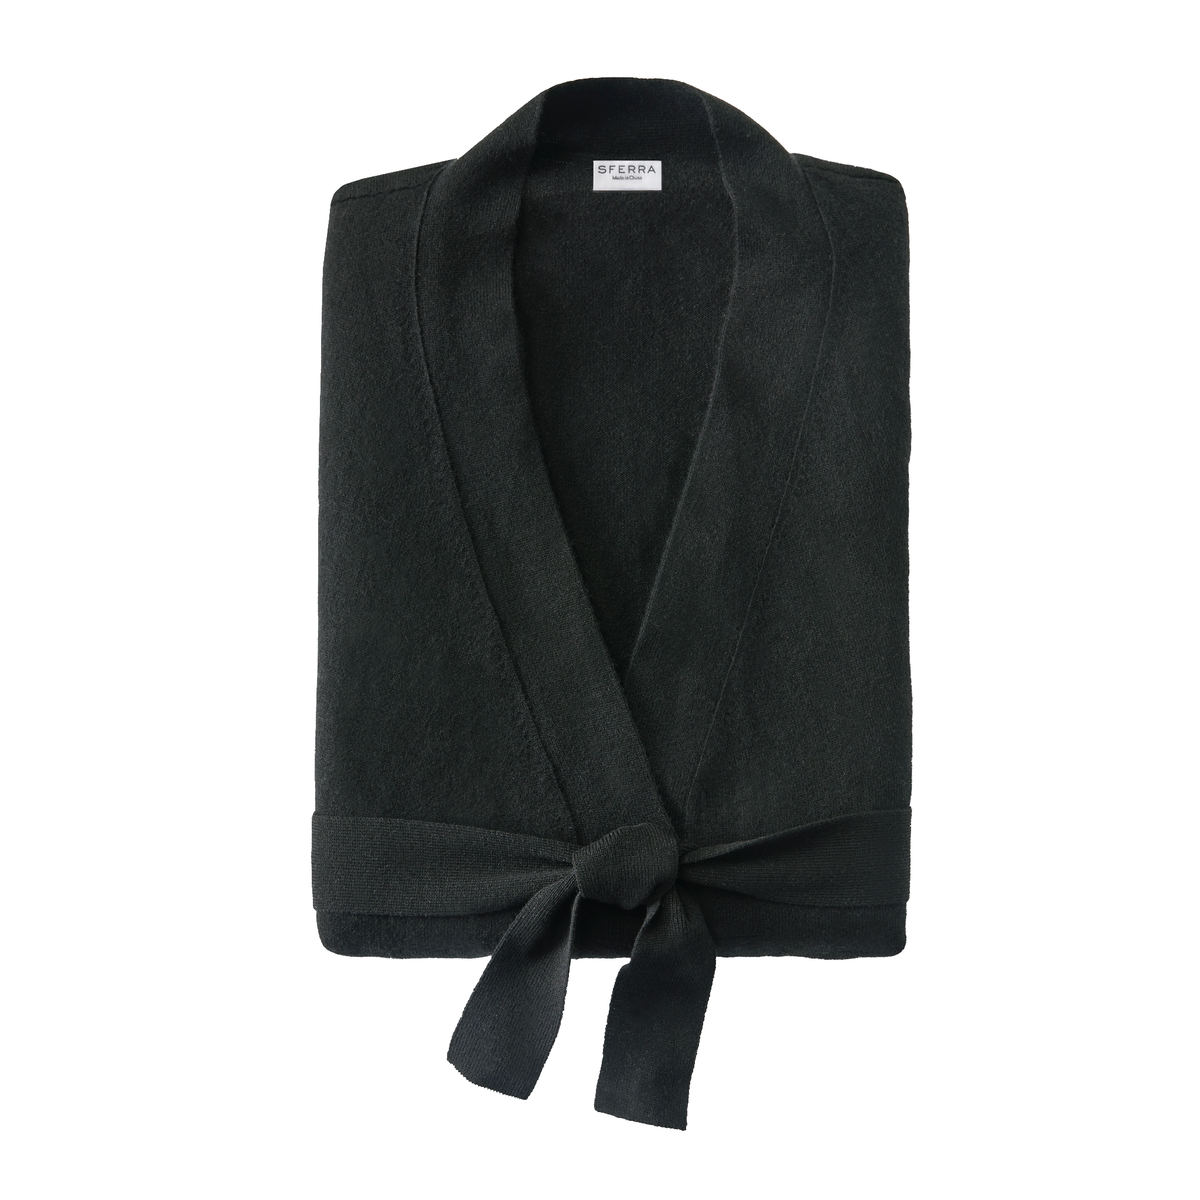 Folded View of Sferra Donna Cashmere Robe in Black Color